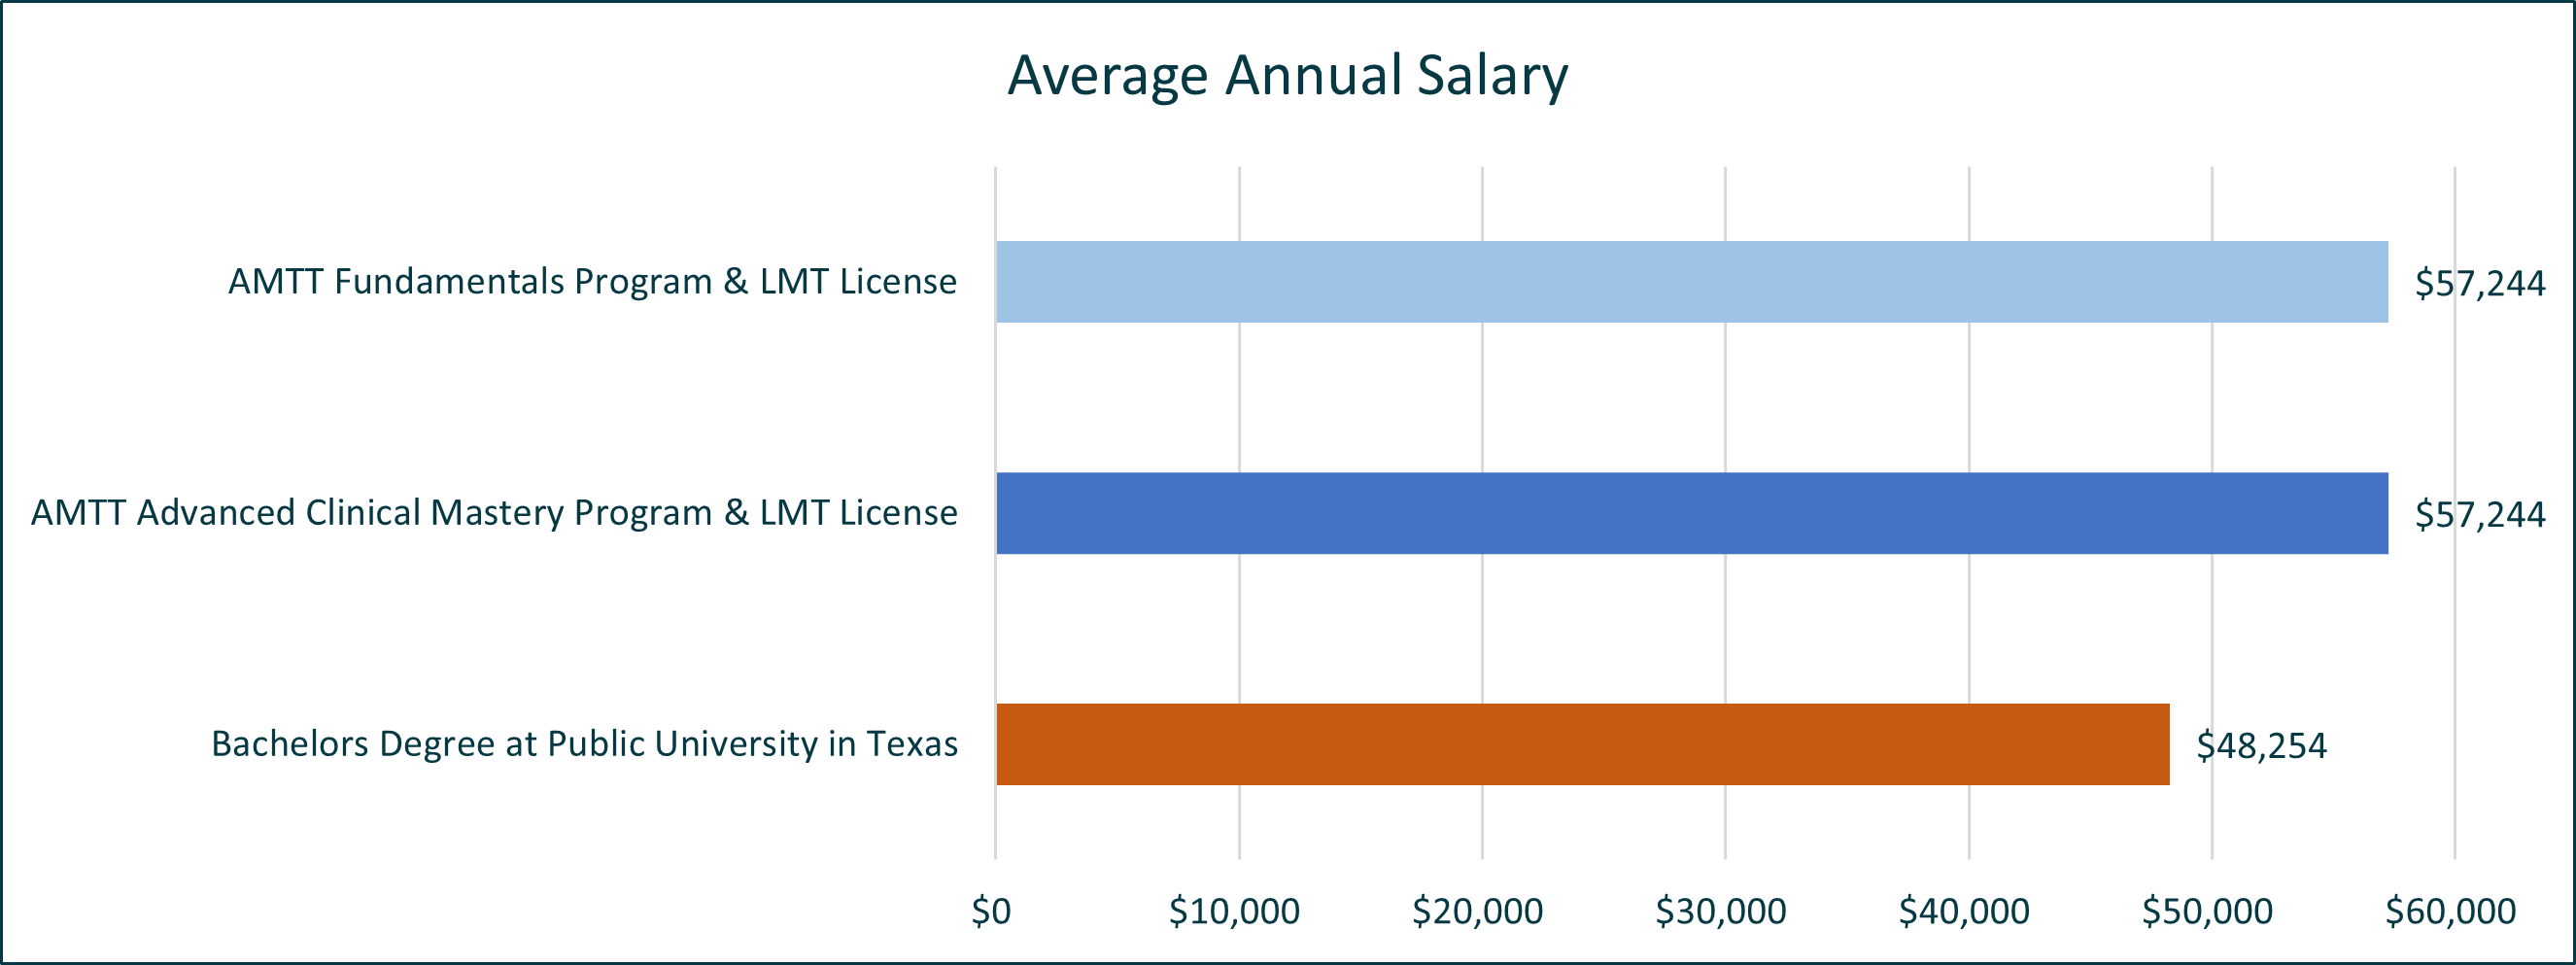 Average annual salary